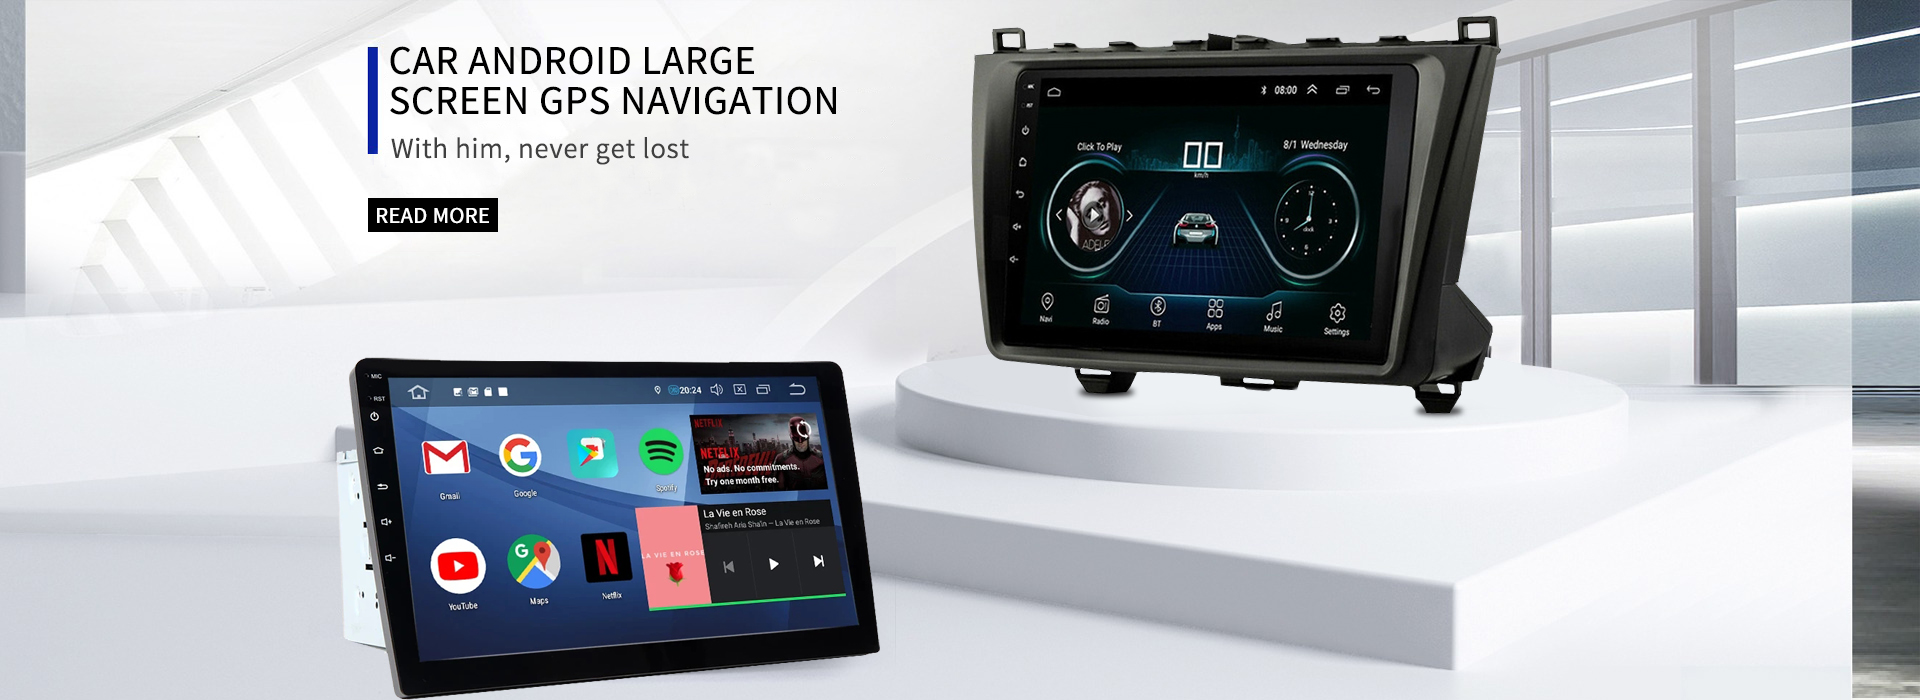 Mobil Android navigasi GPS layar besar